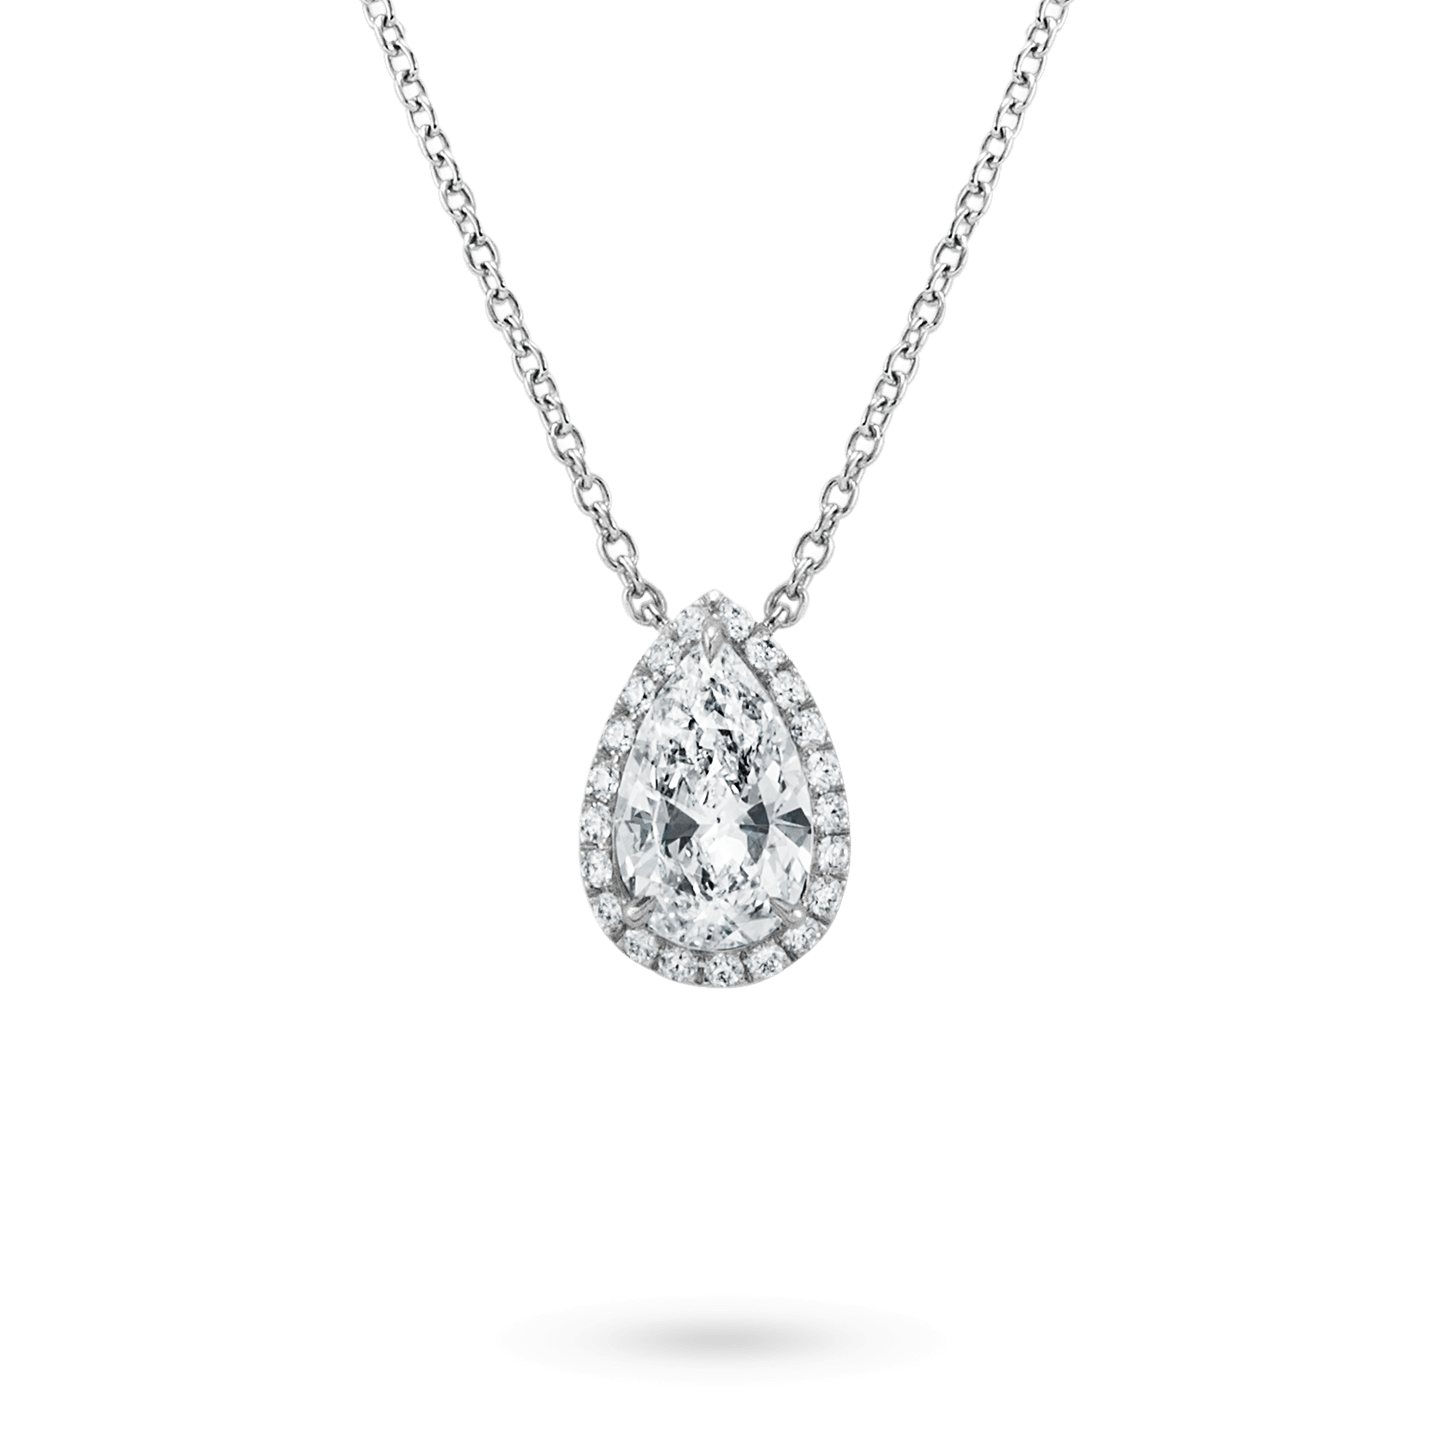 1.63 TDW Pear And Round Brilliant Cut Diamond Pendant |18K White Gold at Rs  117600 | Patel Nagar | Surat | ID: 26750895330